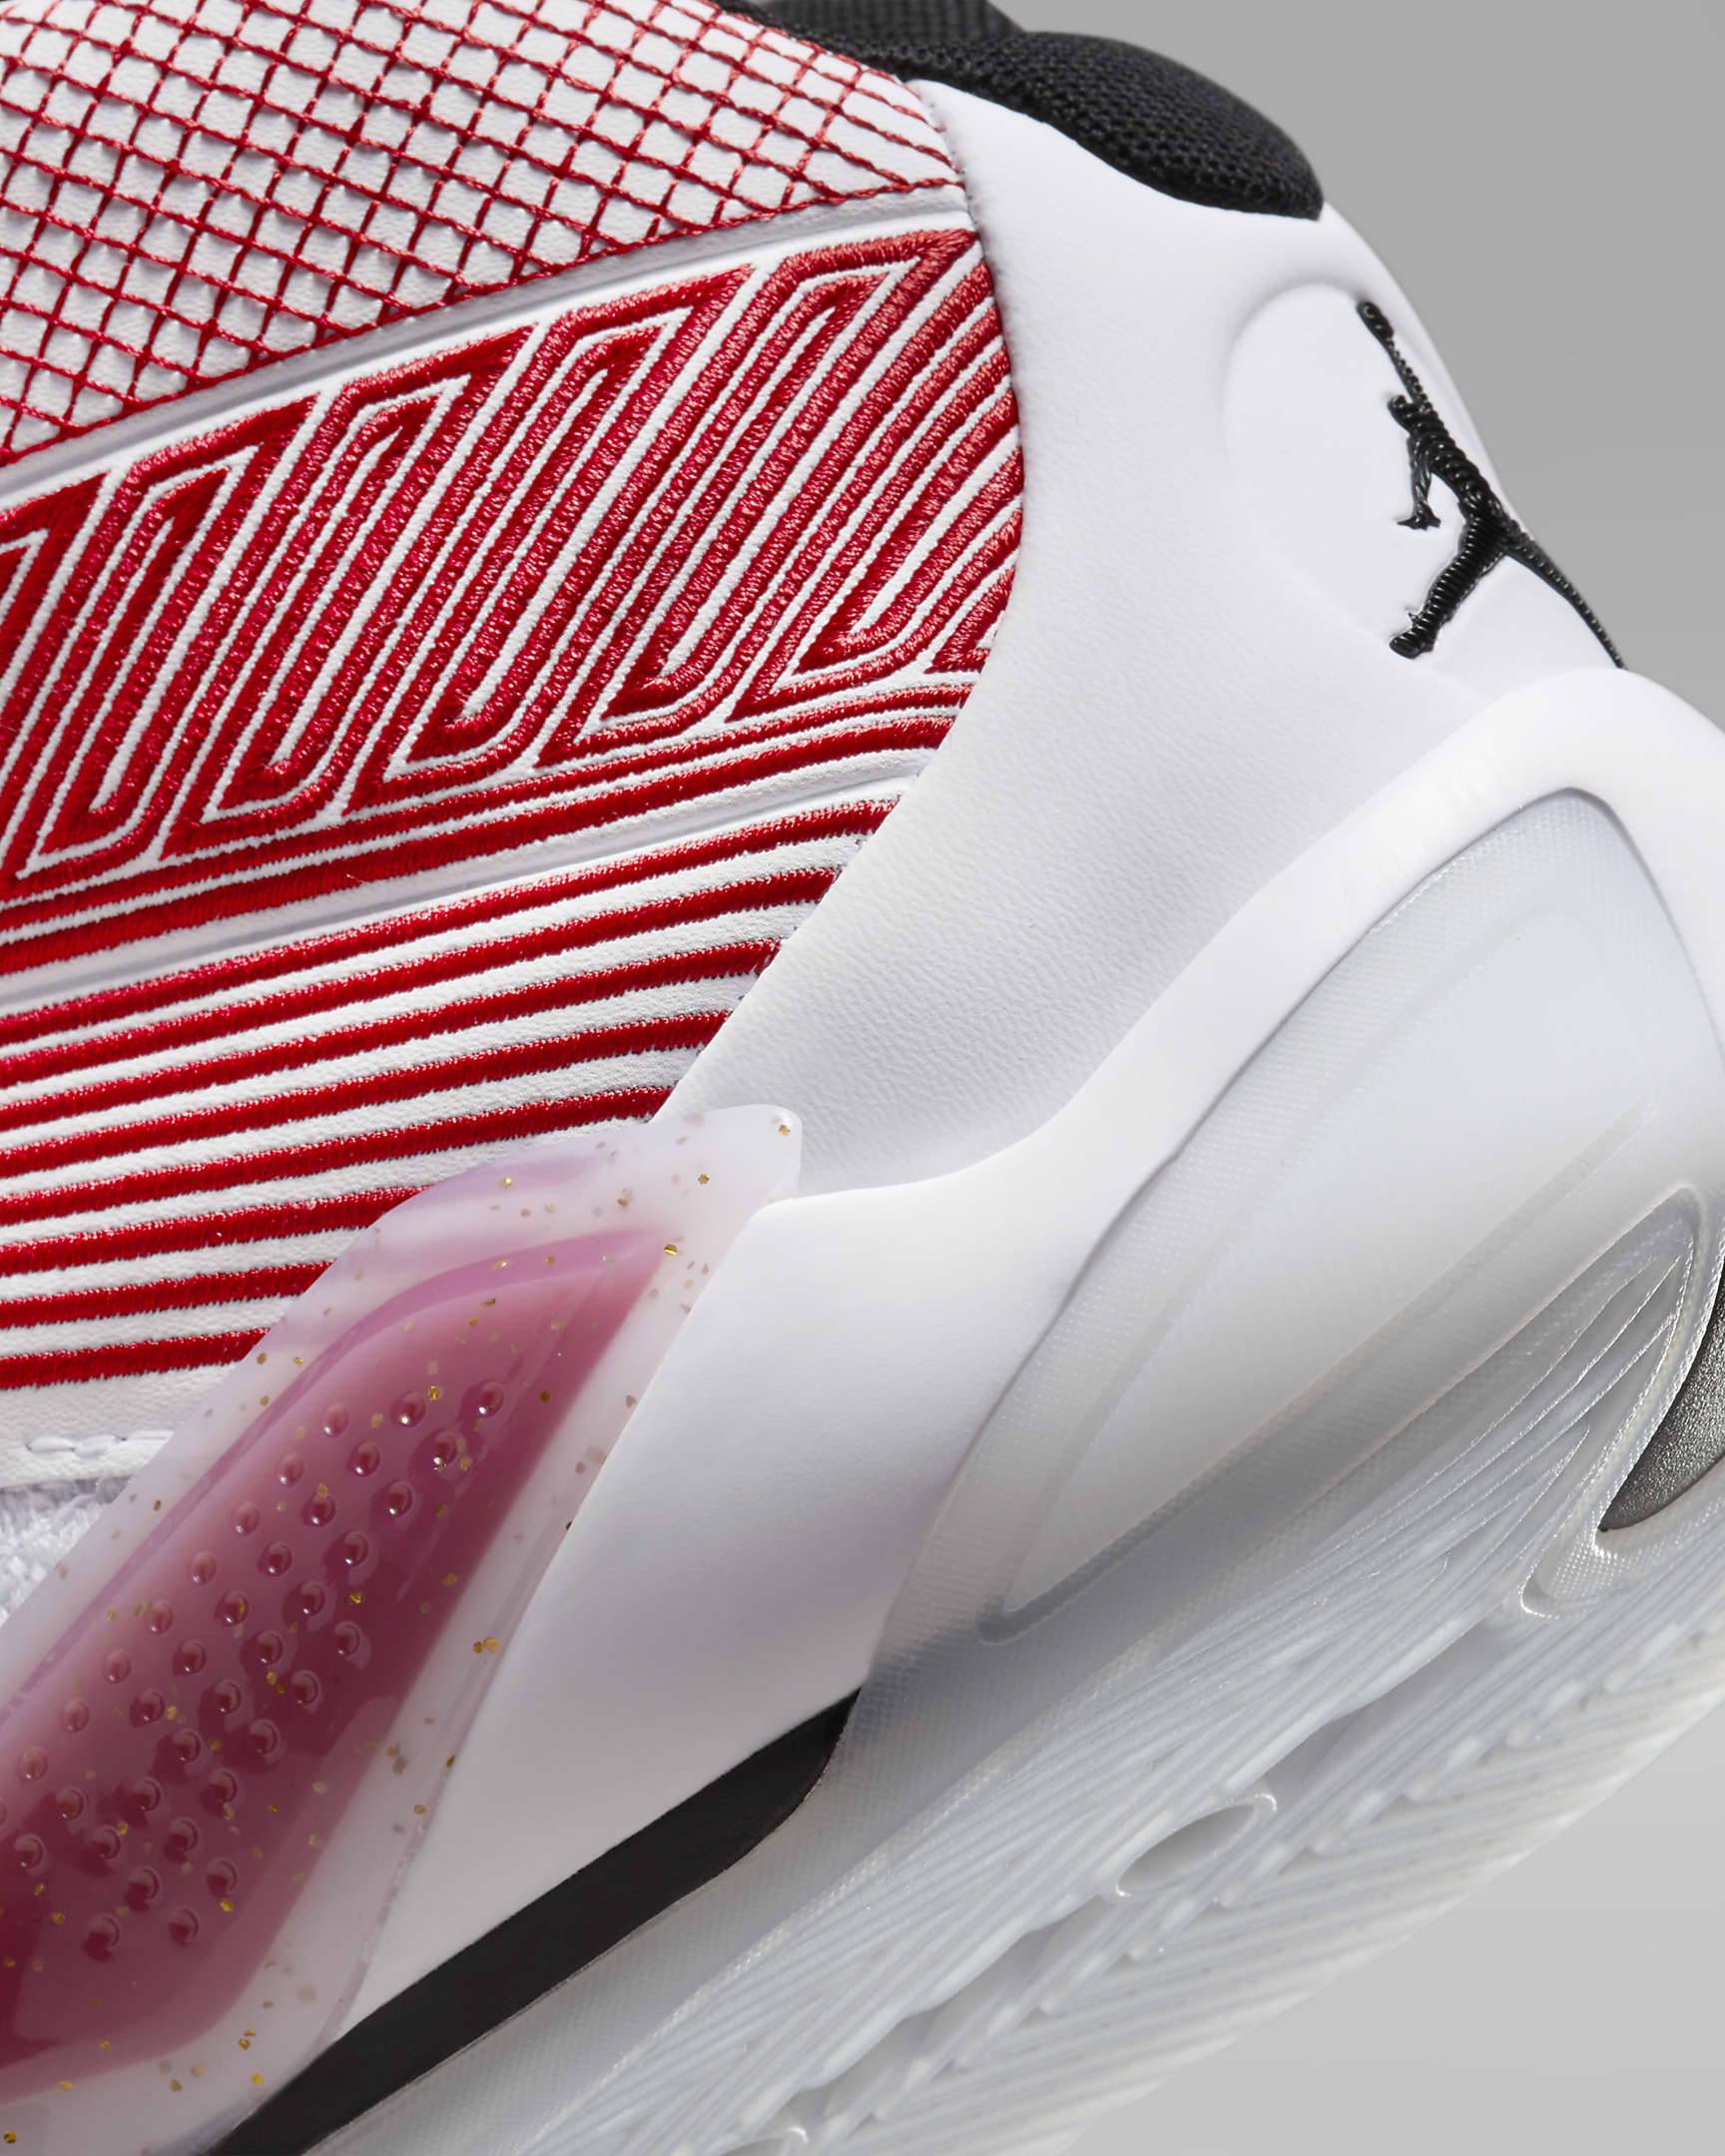 Air Jordan XXXVIII 'Celebration' Basketball Shoes - White/University Red/Metallic Gold/Black